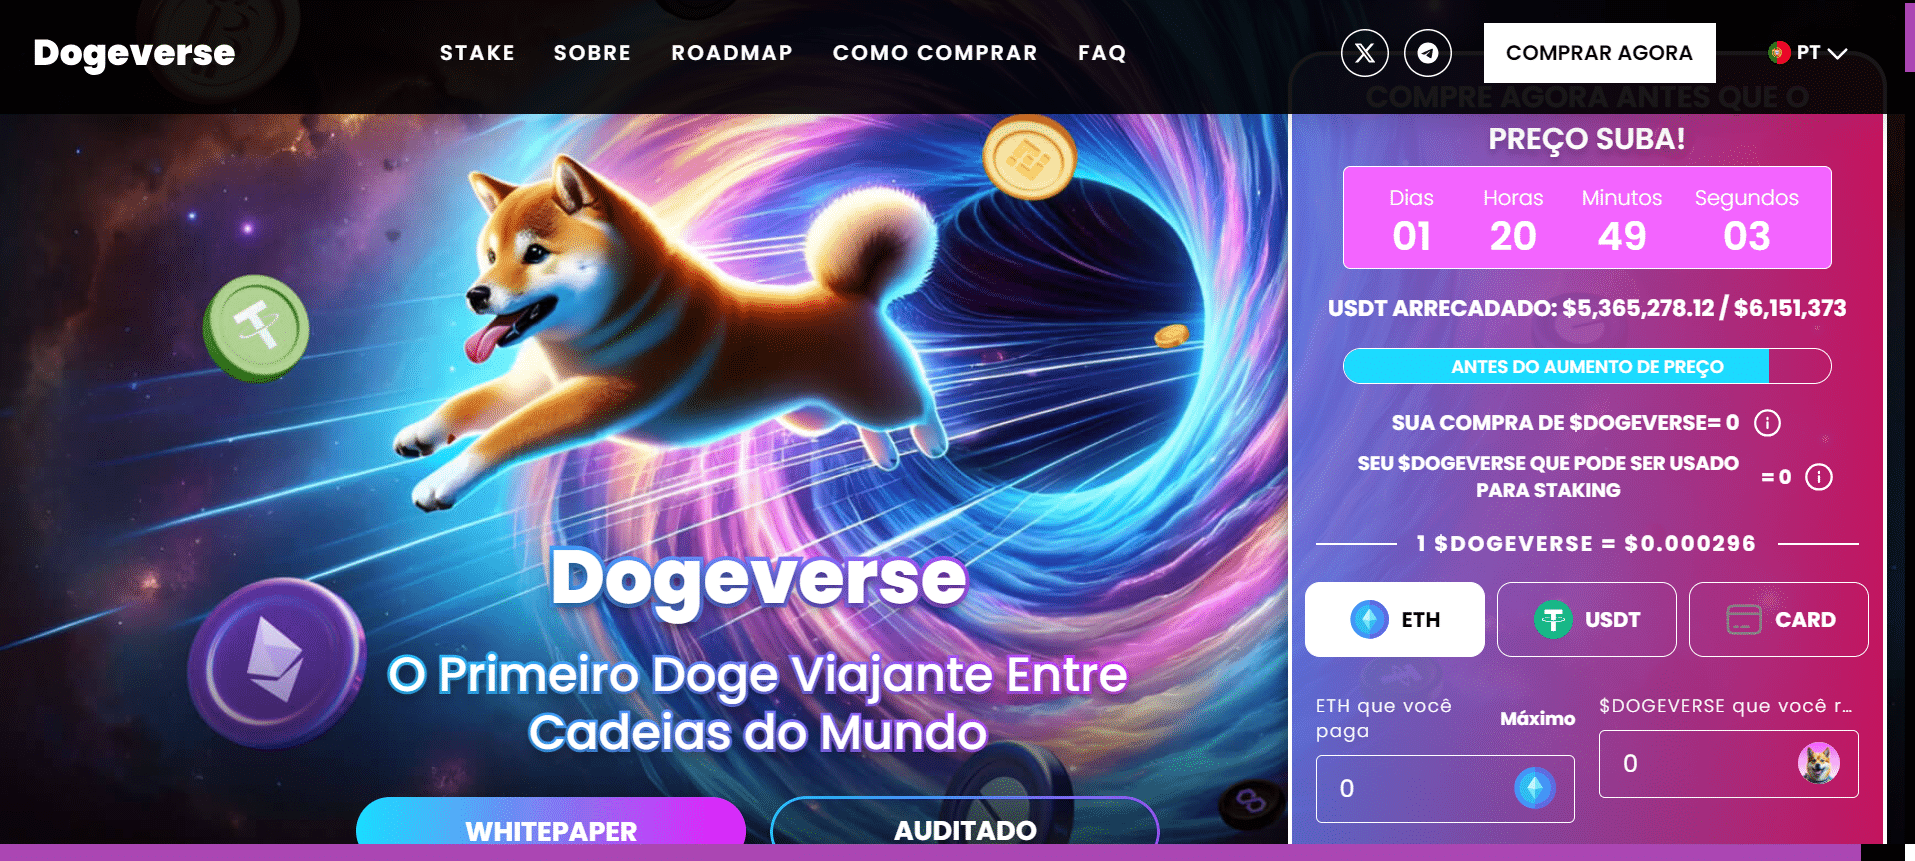 Dogeverse é a primeira criptomoeda com tema Doge que oferece a funcionalidade de multi-chain